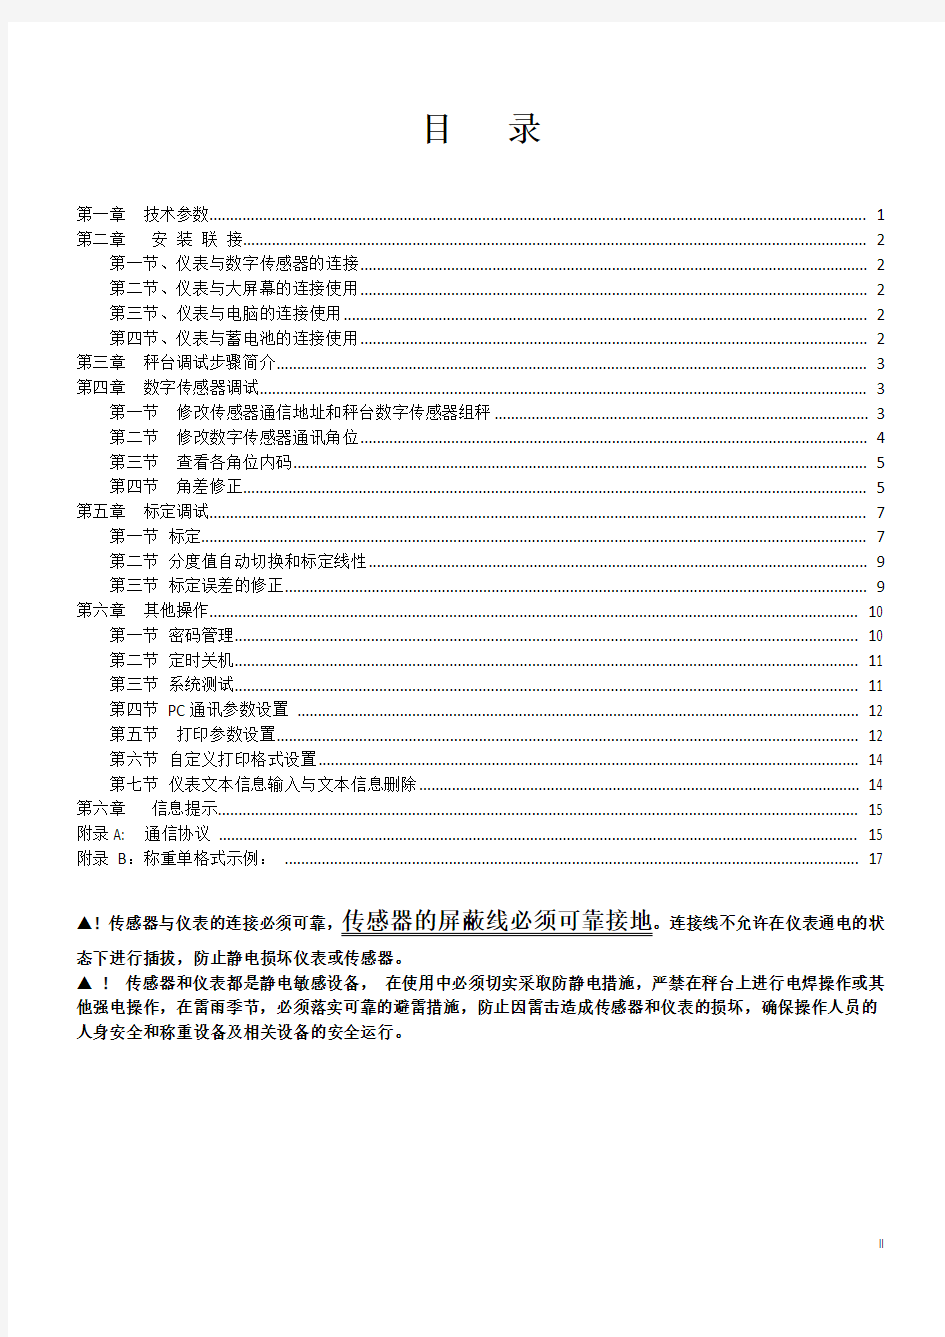 D2008F系列技术说明书简化版(中性)